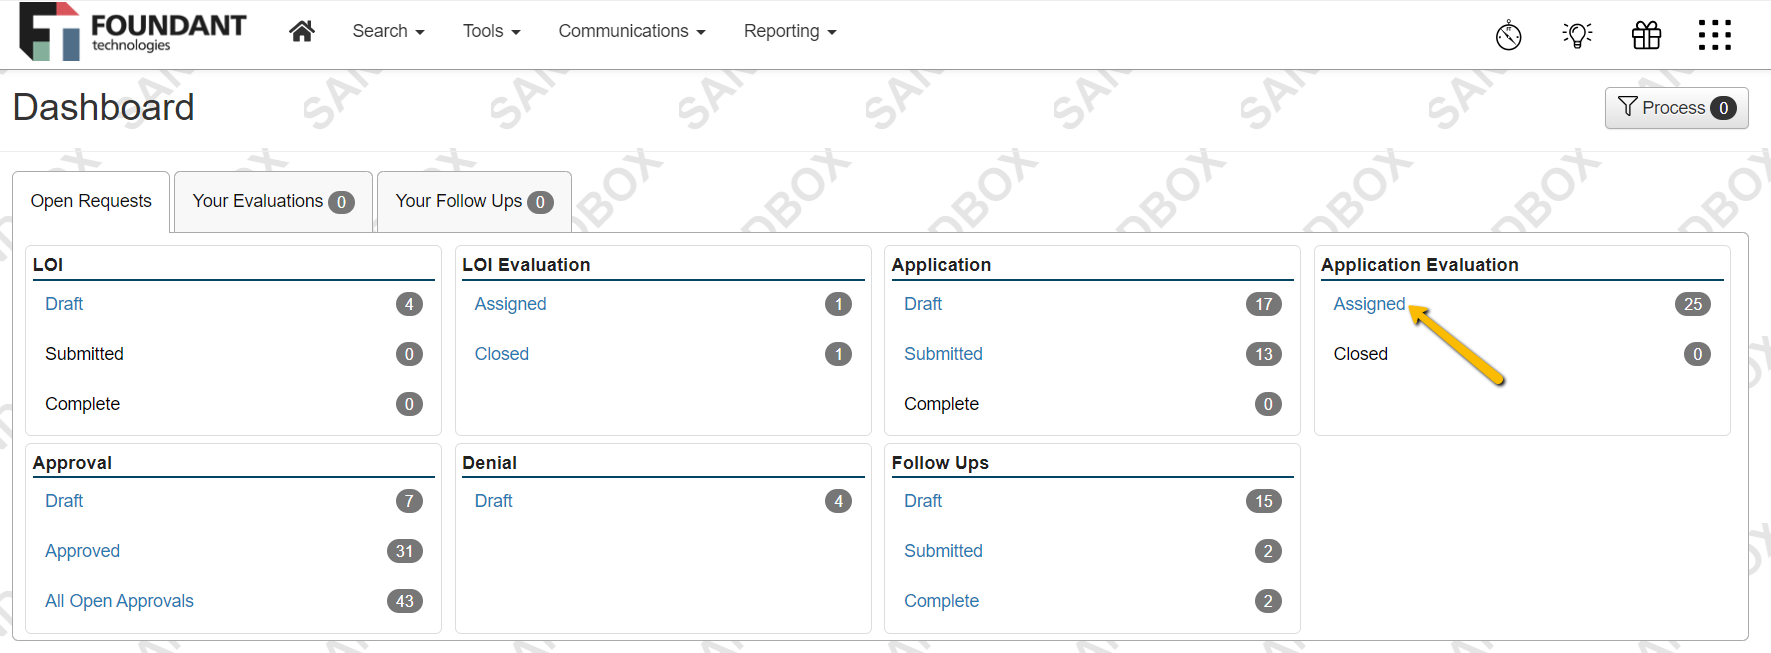 Application Evalution Assigned workload page